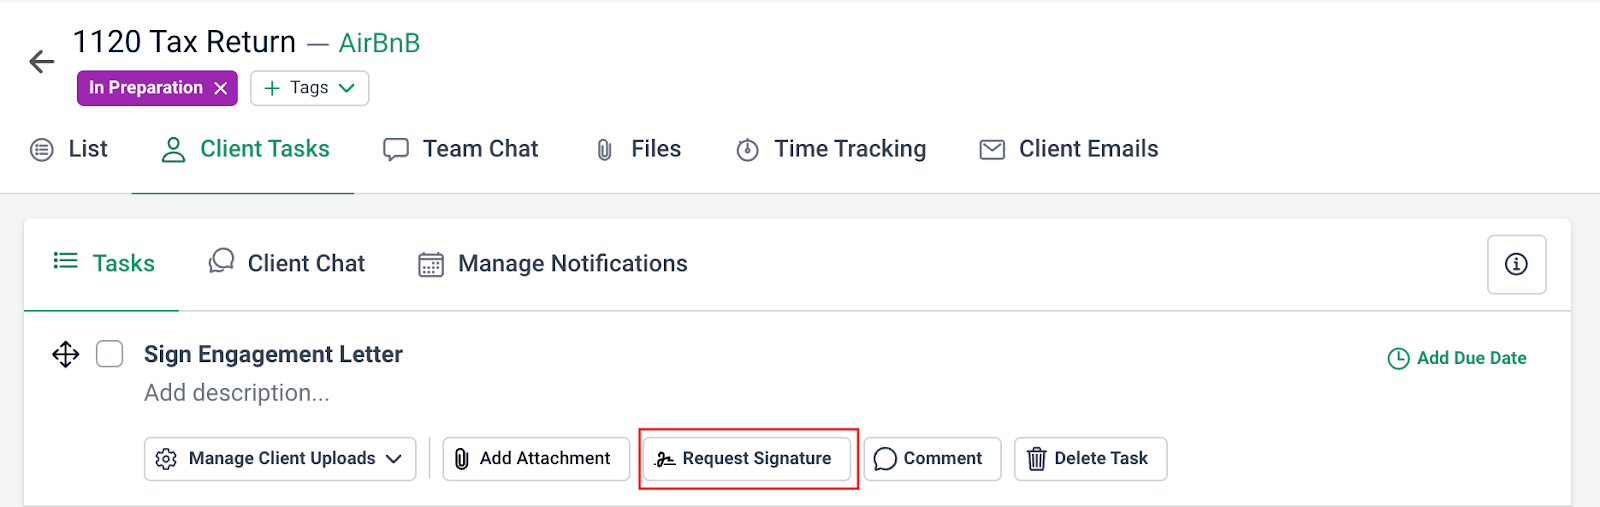 click on request signature to get client signature